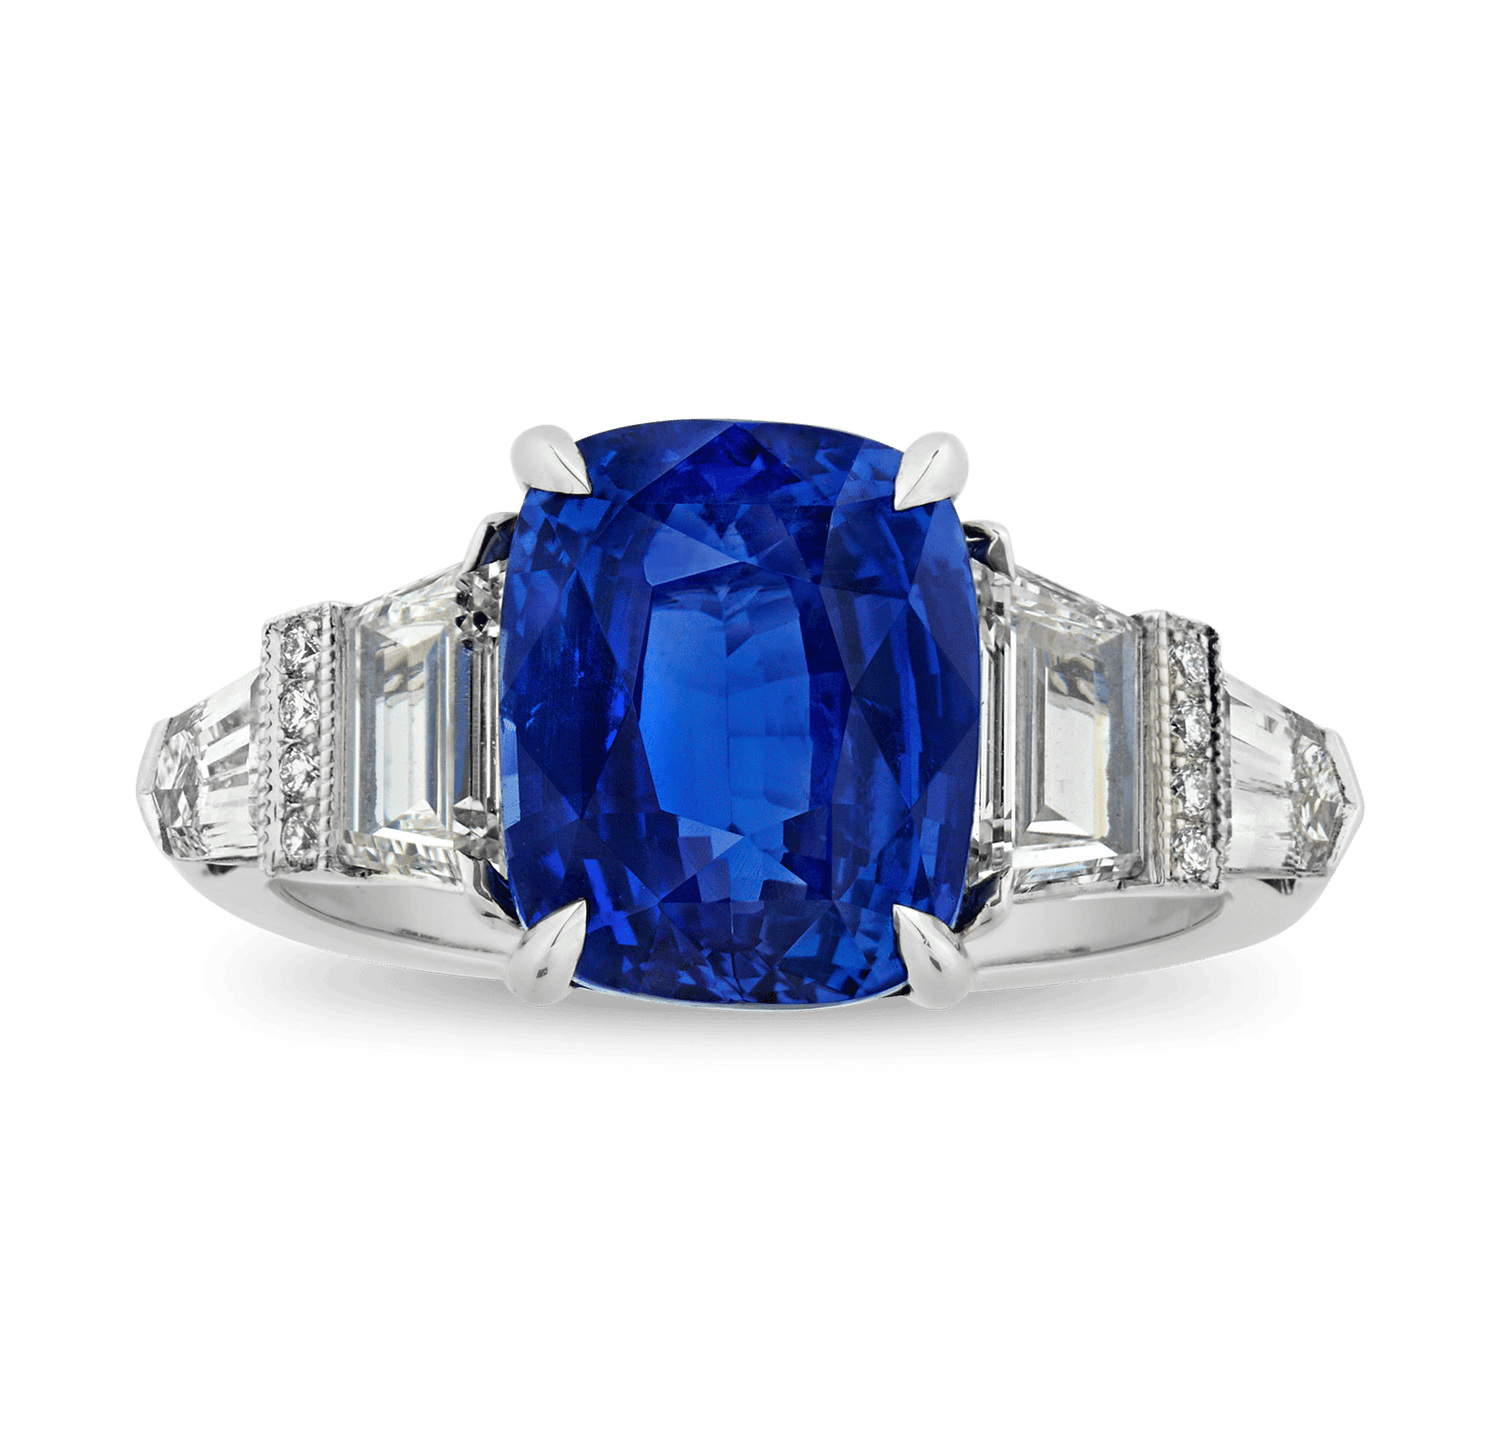 Raymond Yard Sapphire Ring, 4.60 Carats